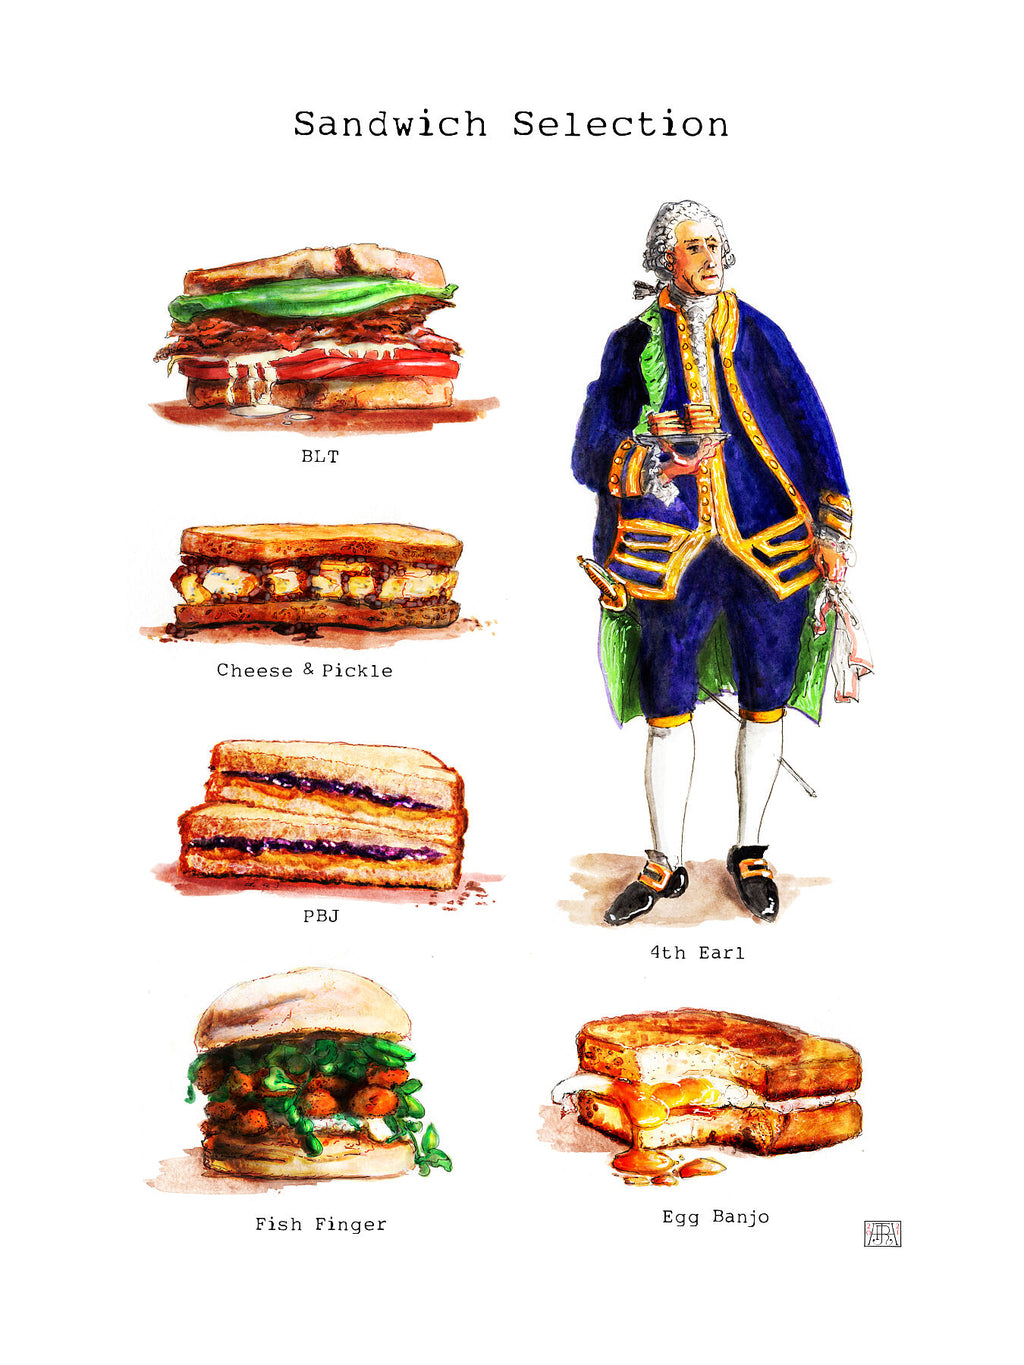 Sandwich selection